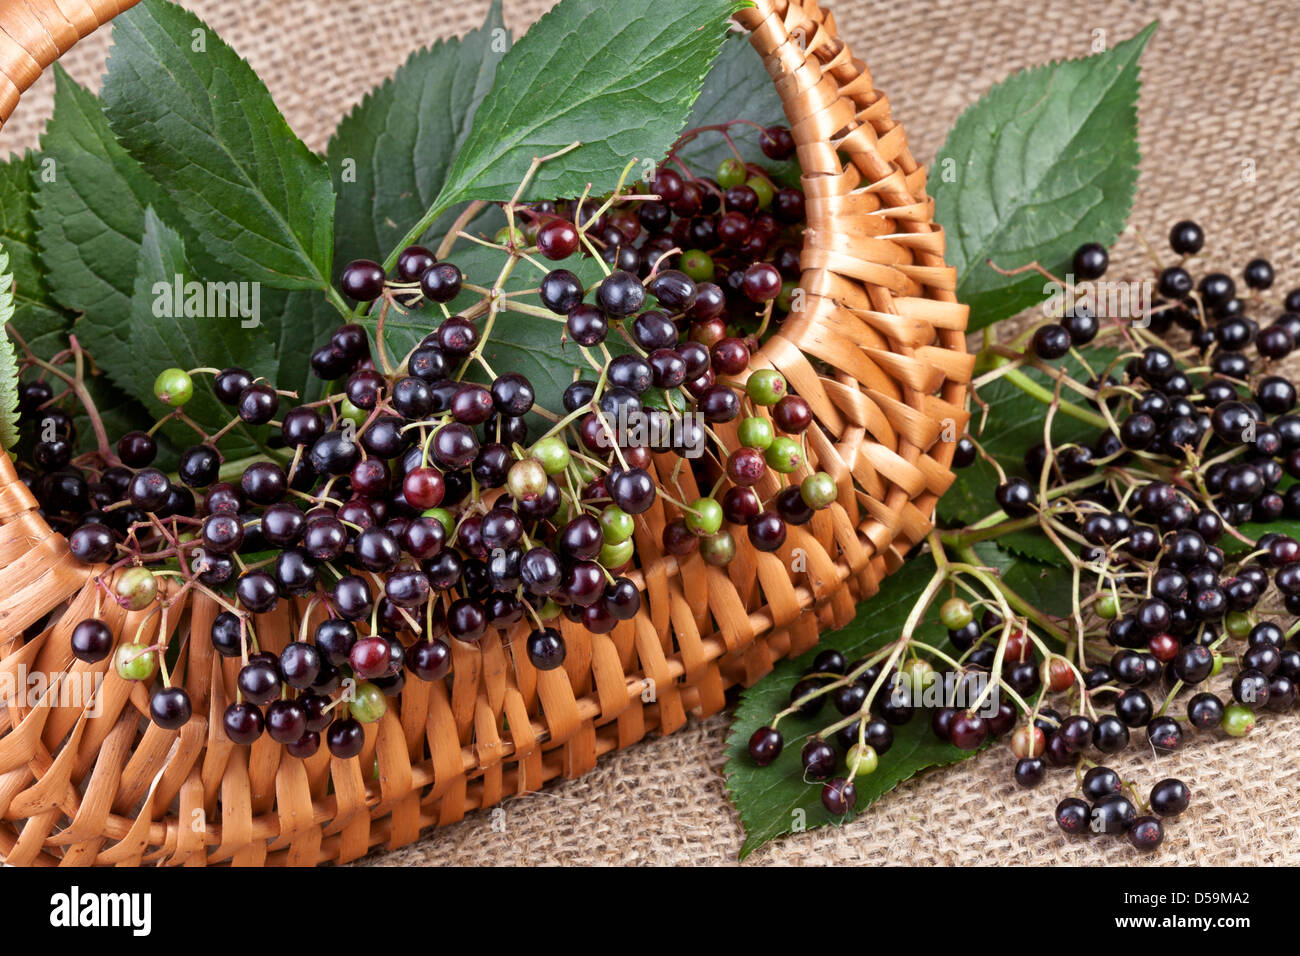 elderberry in basket on jute background Stock Photo